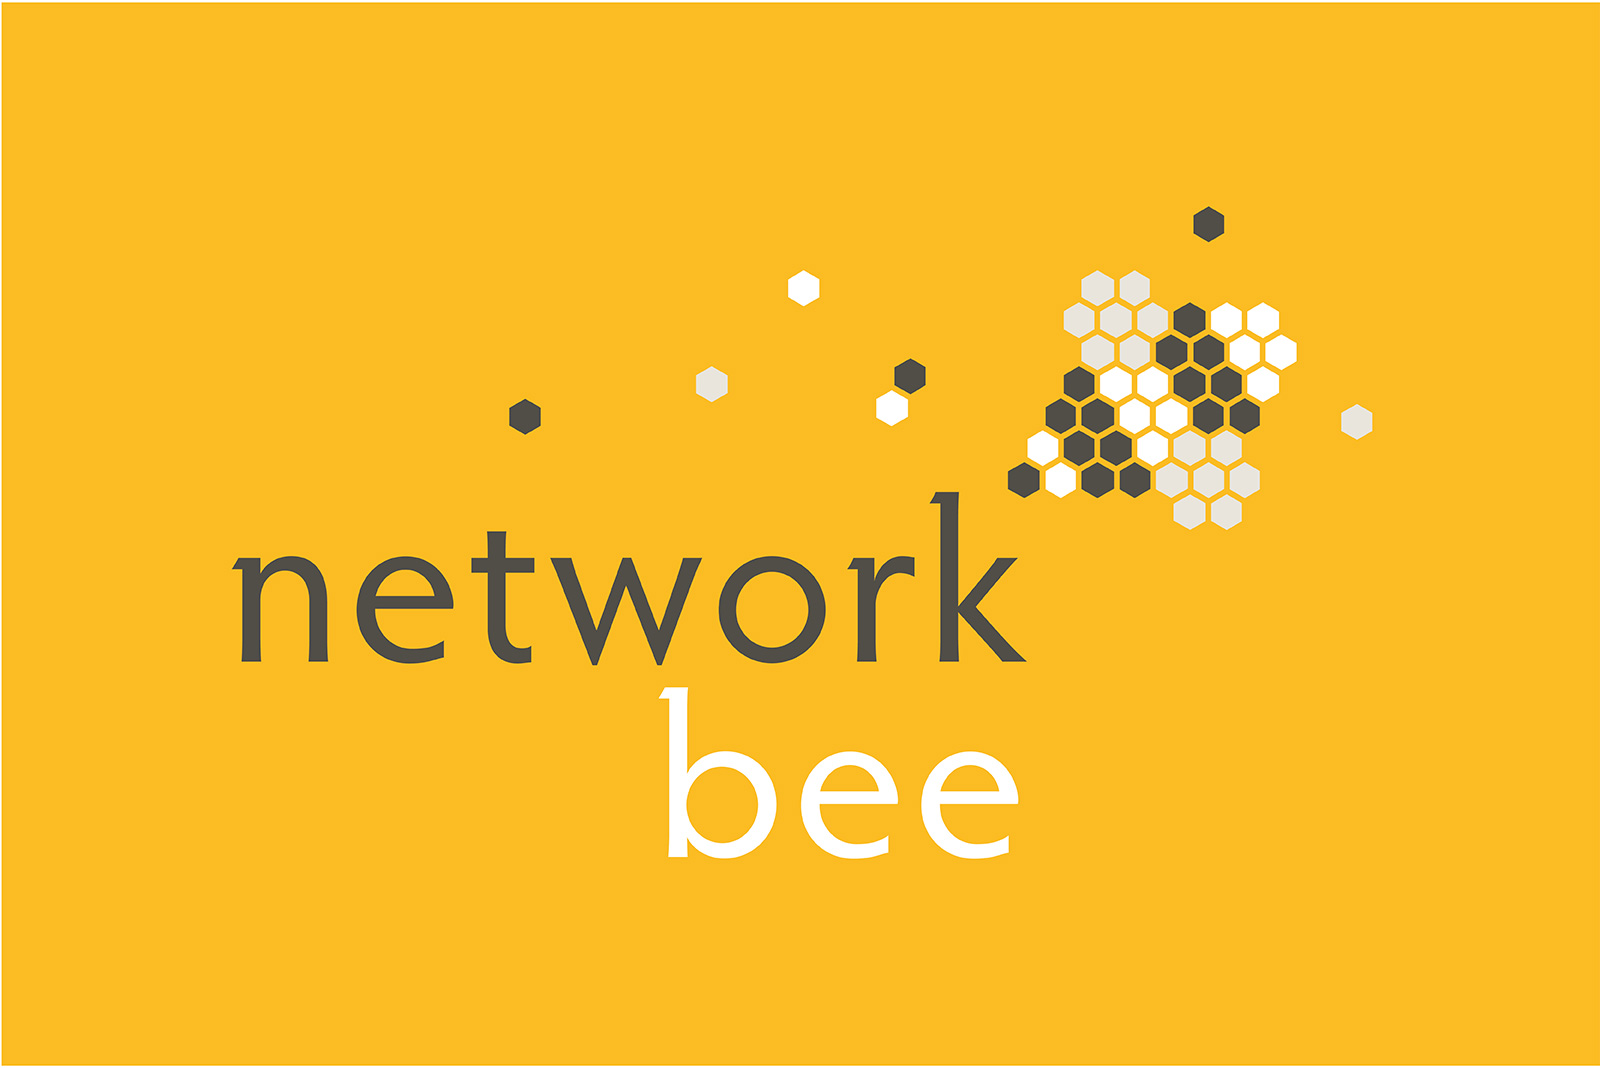 Network bee logo design